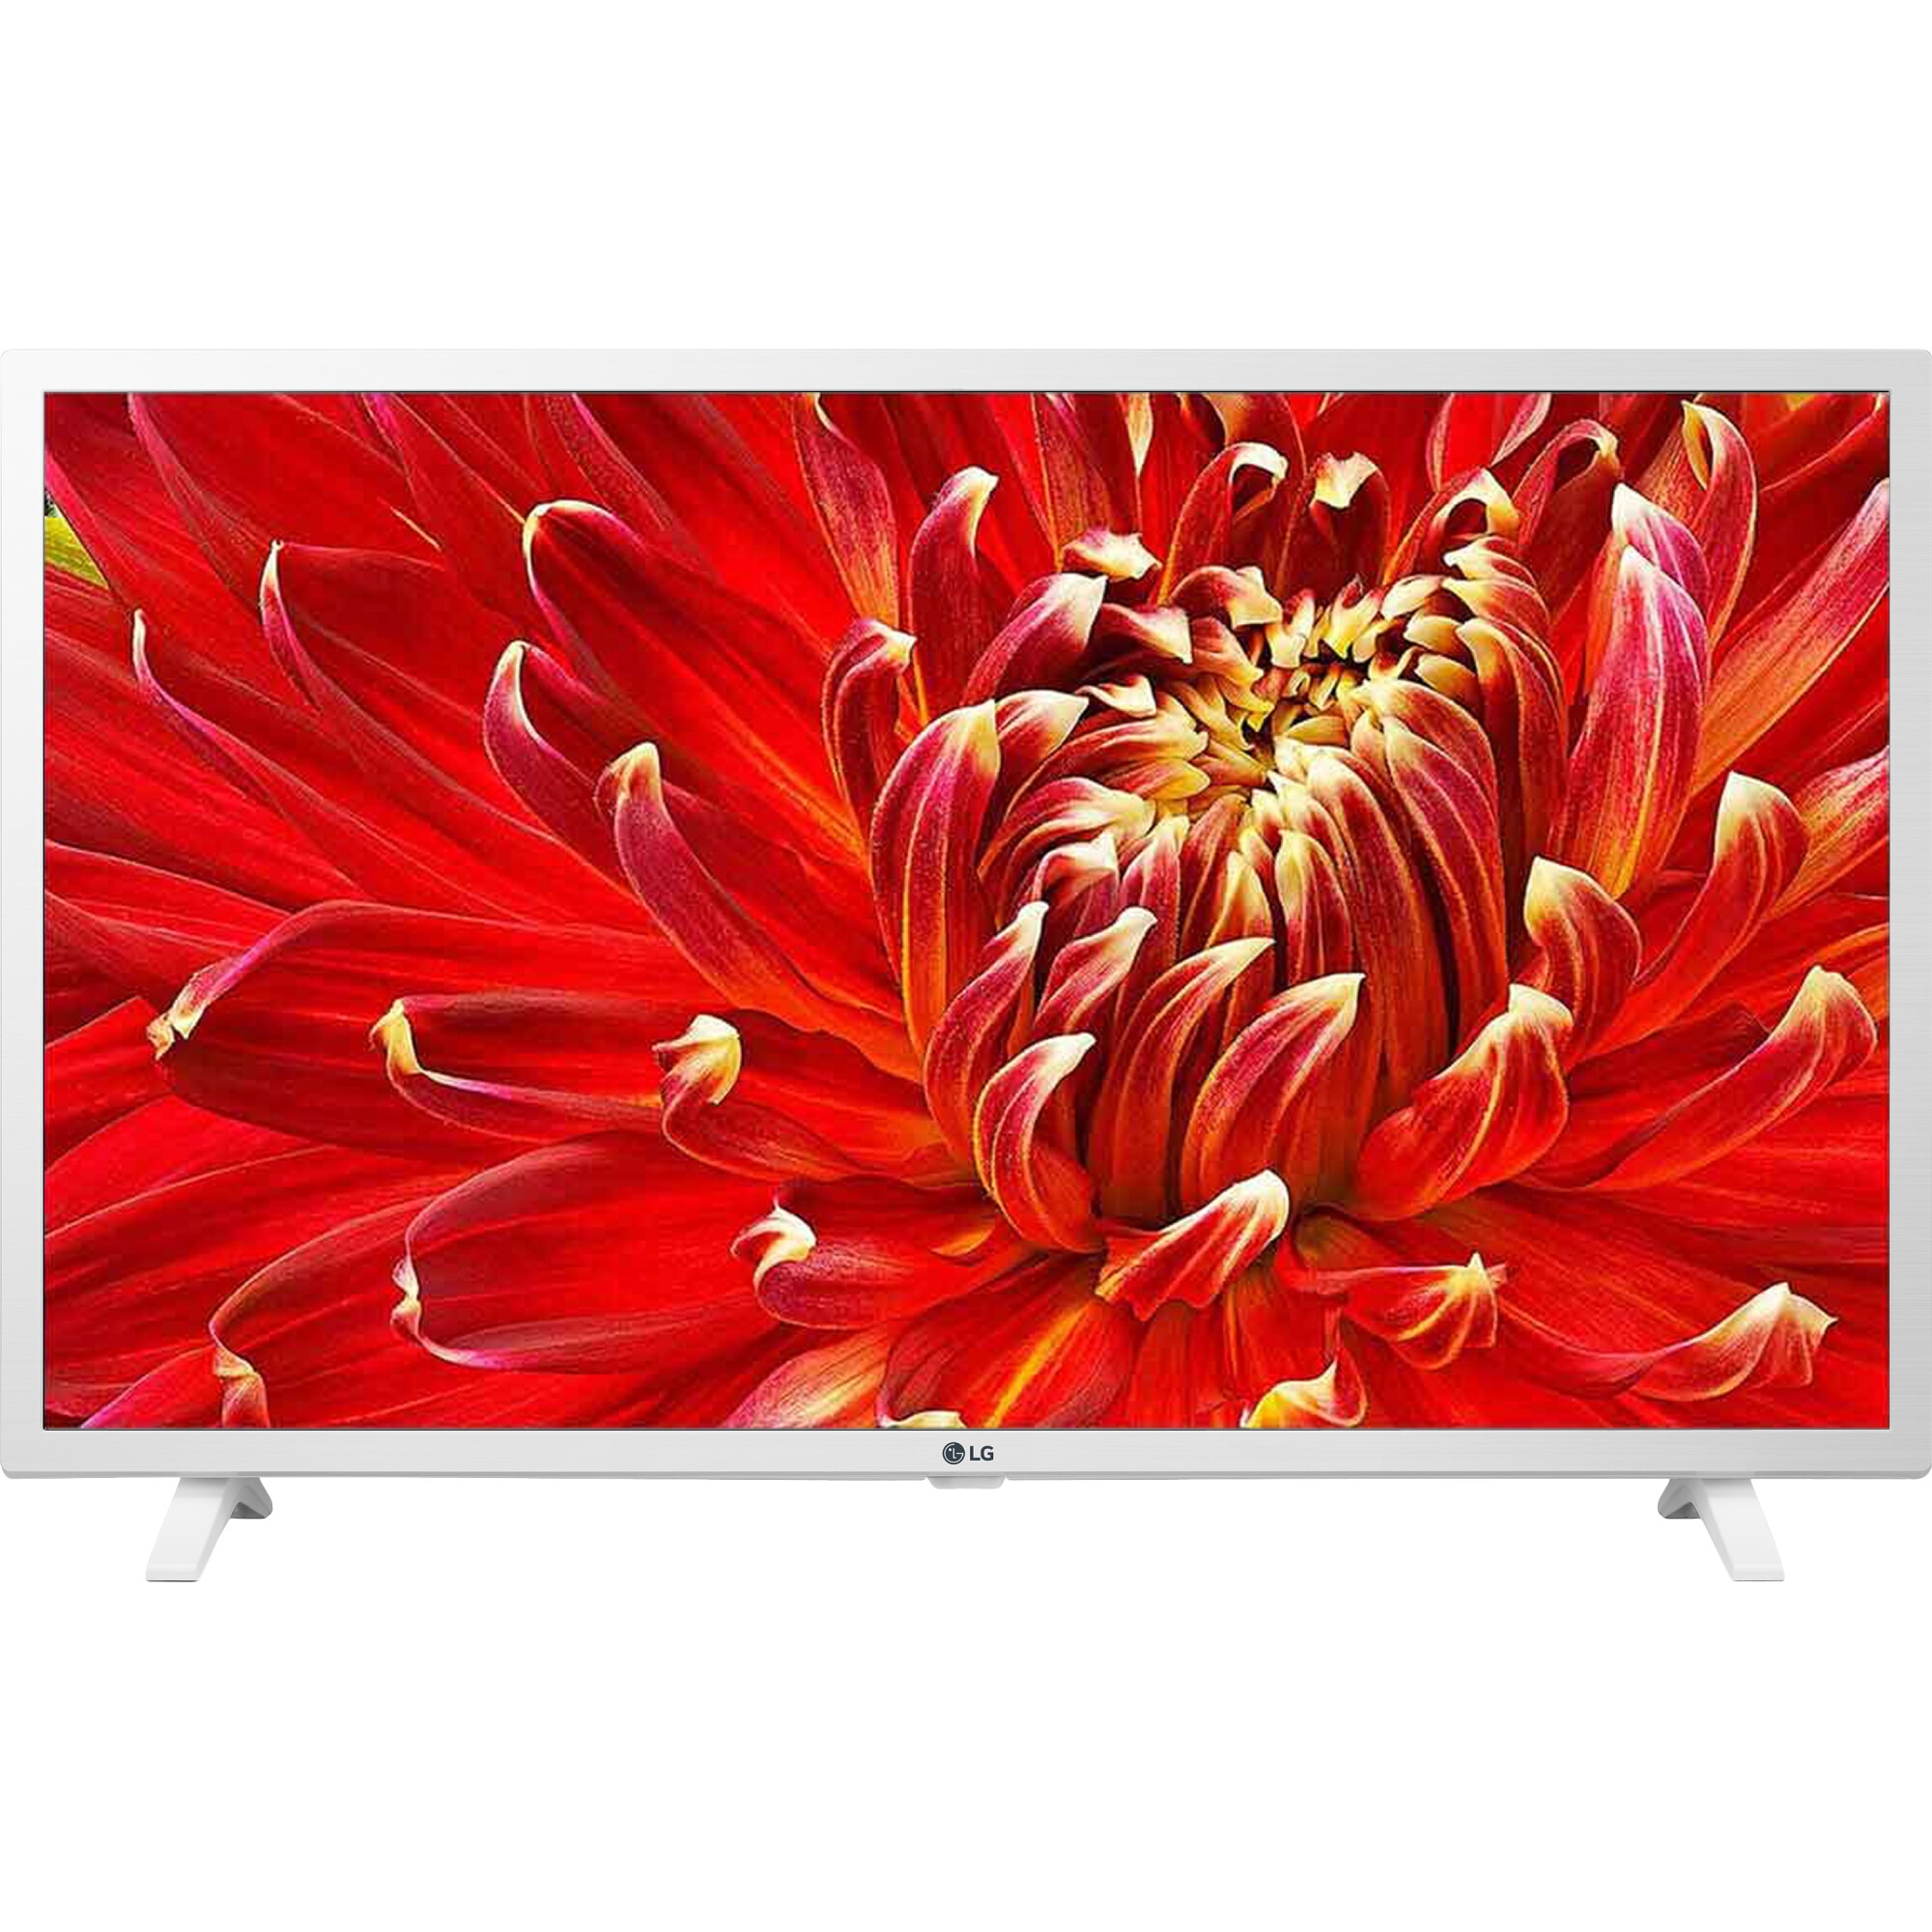 Самара купить телевизор смарт. Телевизор LG 32lm6350. Телевизор LG 32lm6350 32" (2019). Телевизор LG 32lm6380plc. Телевизор LG 32lm6390 32" (2019).